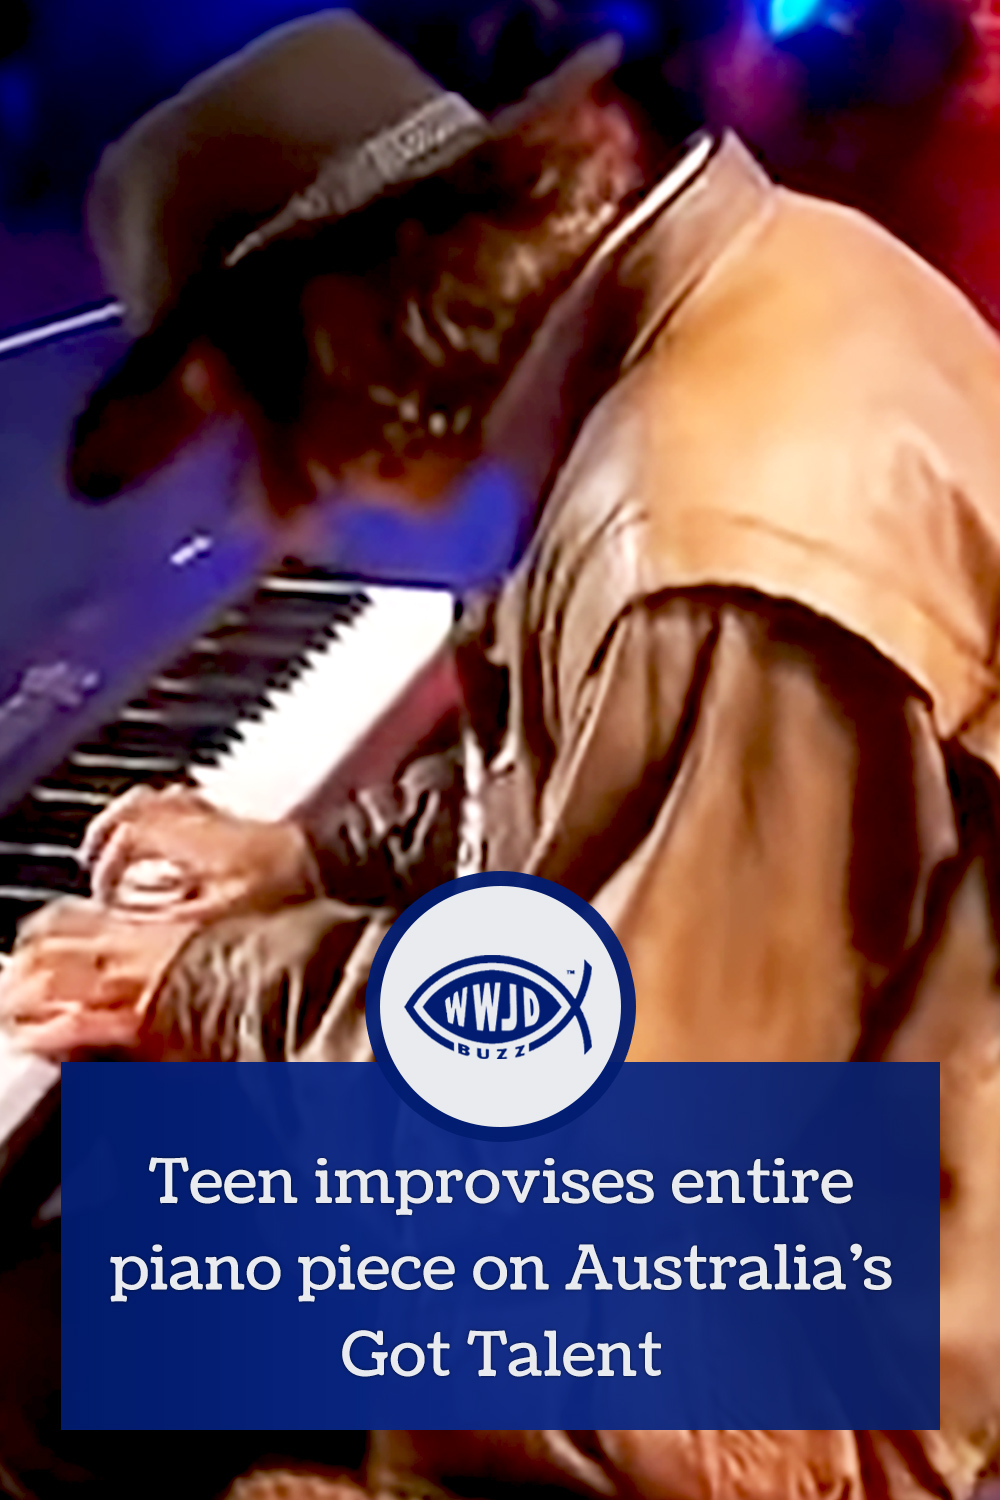 Teen improvises entire piano piece on Australia’s Got Talent